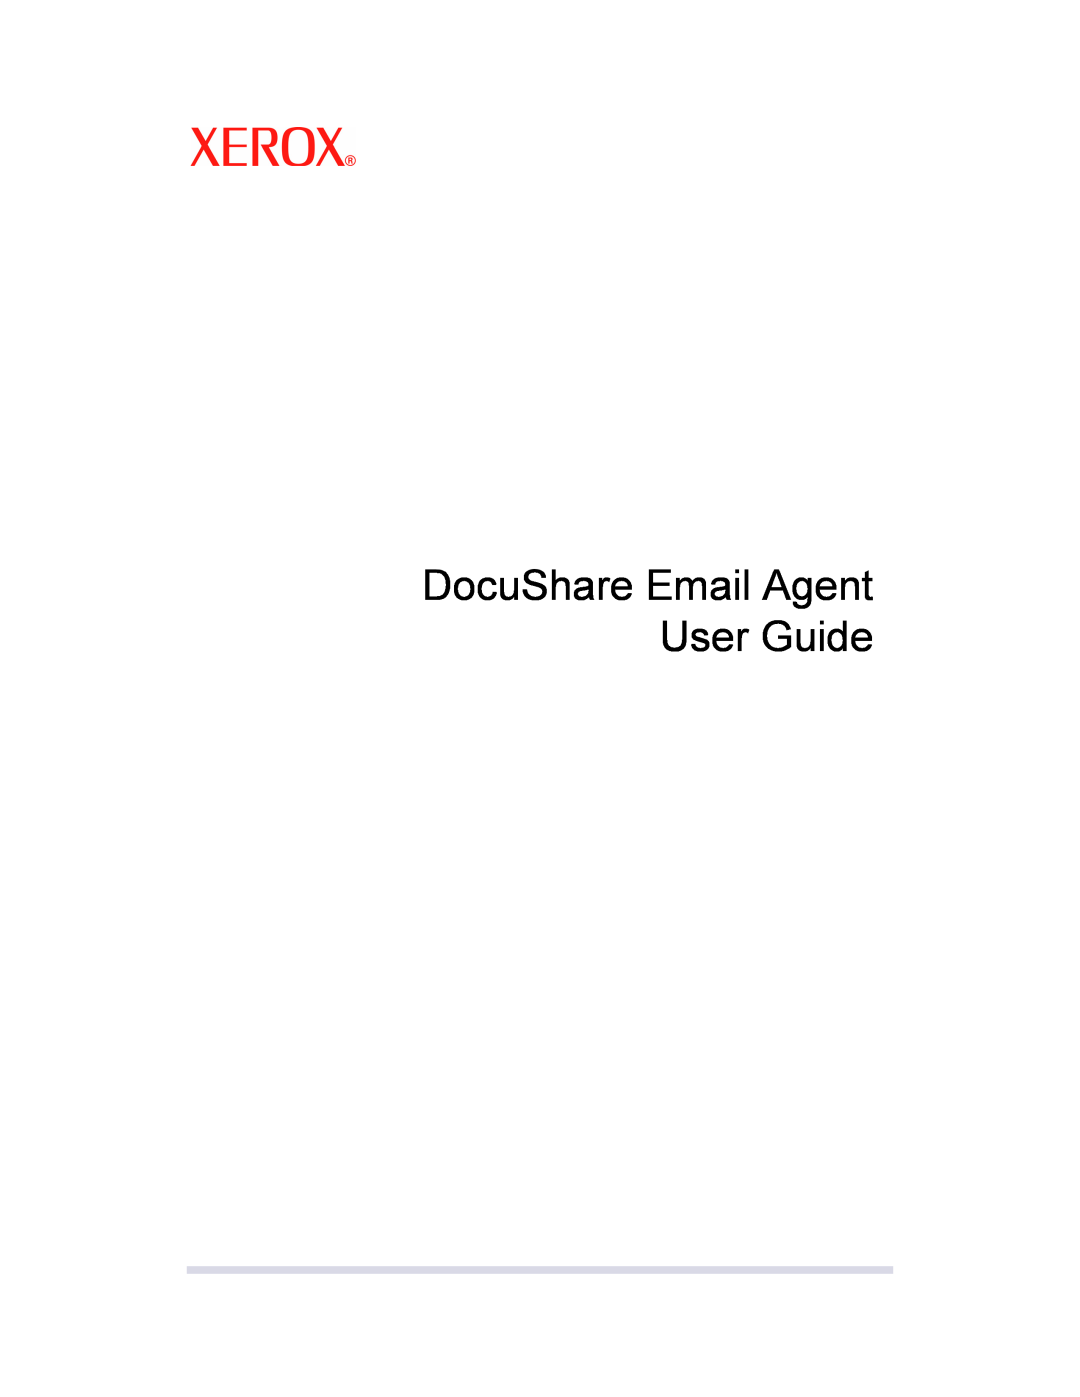 Xerox DocuShare 6.0 manual DocuShare Email Agent User Guide 